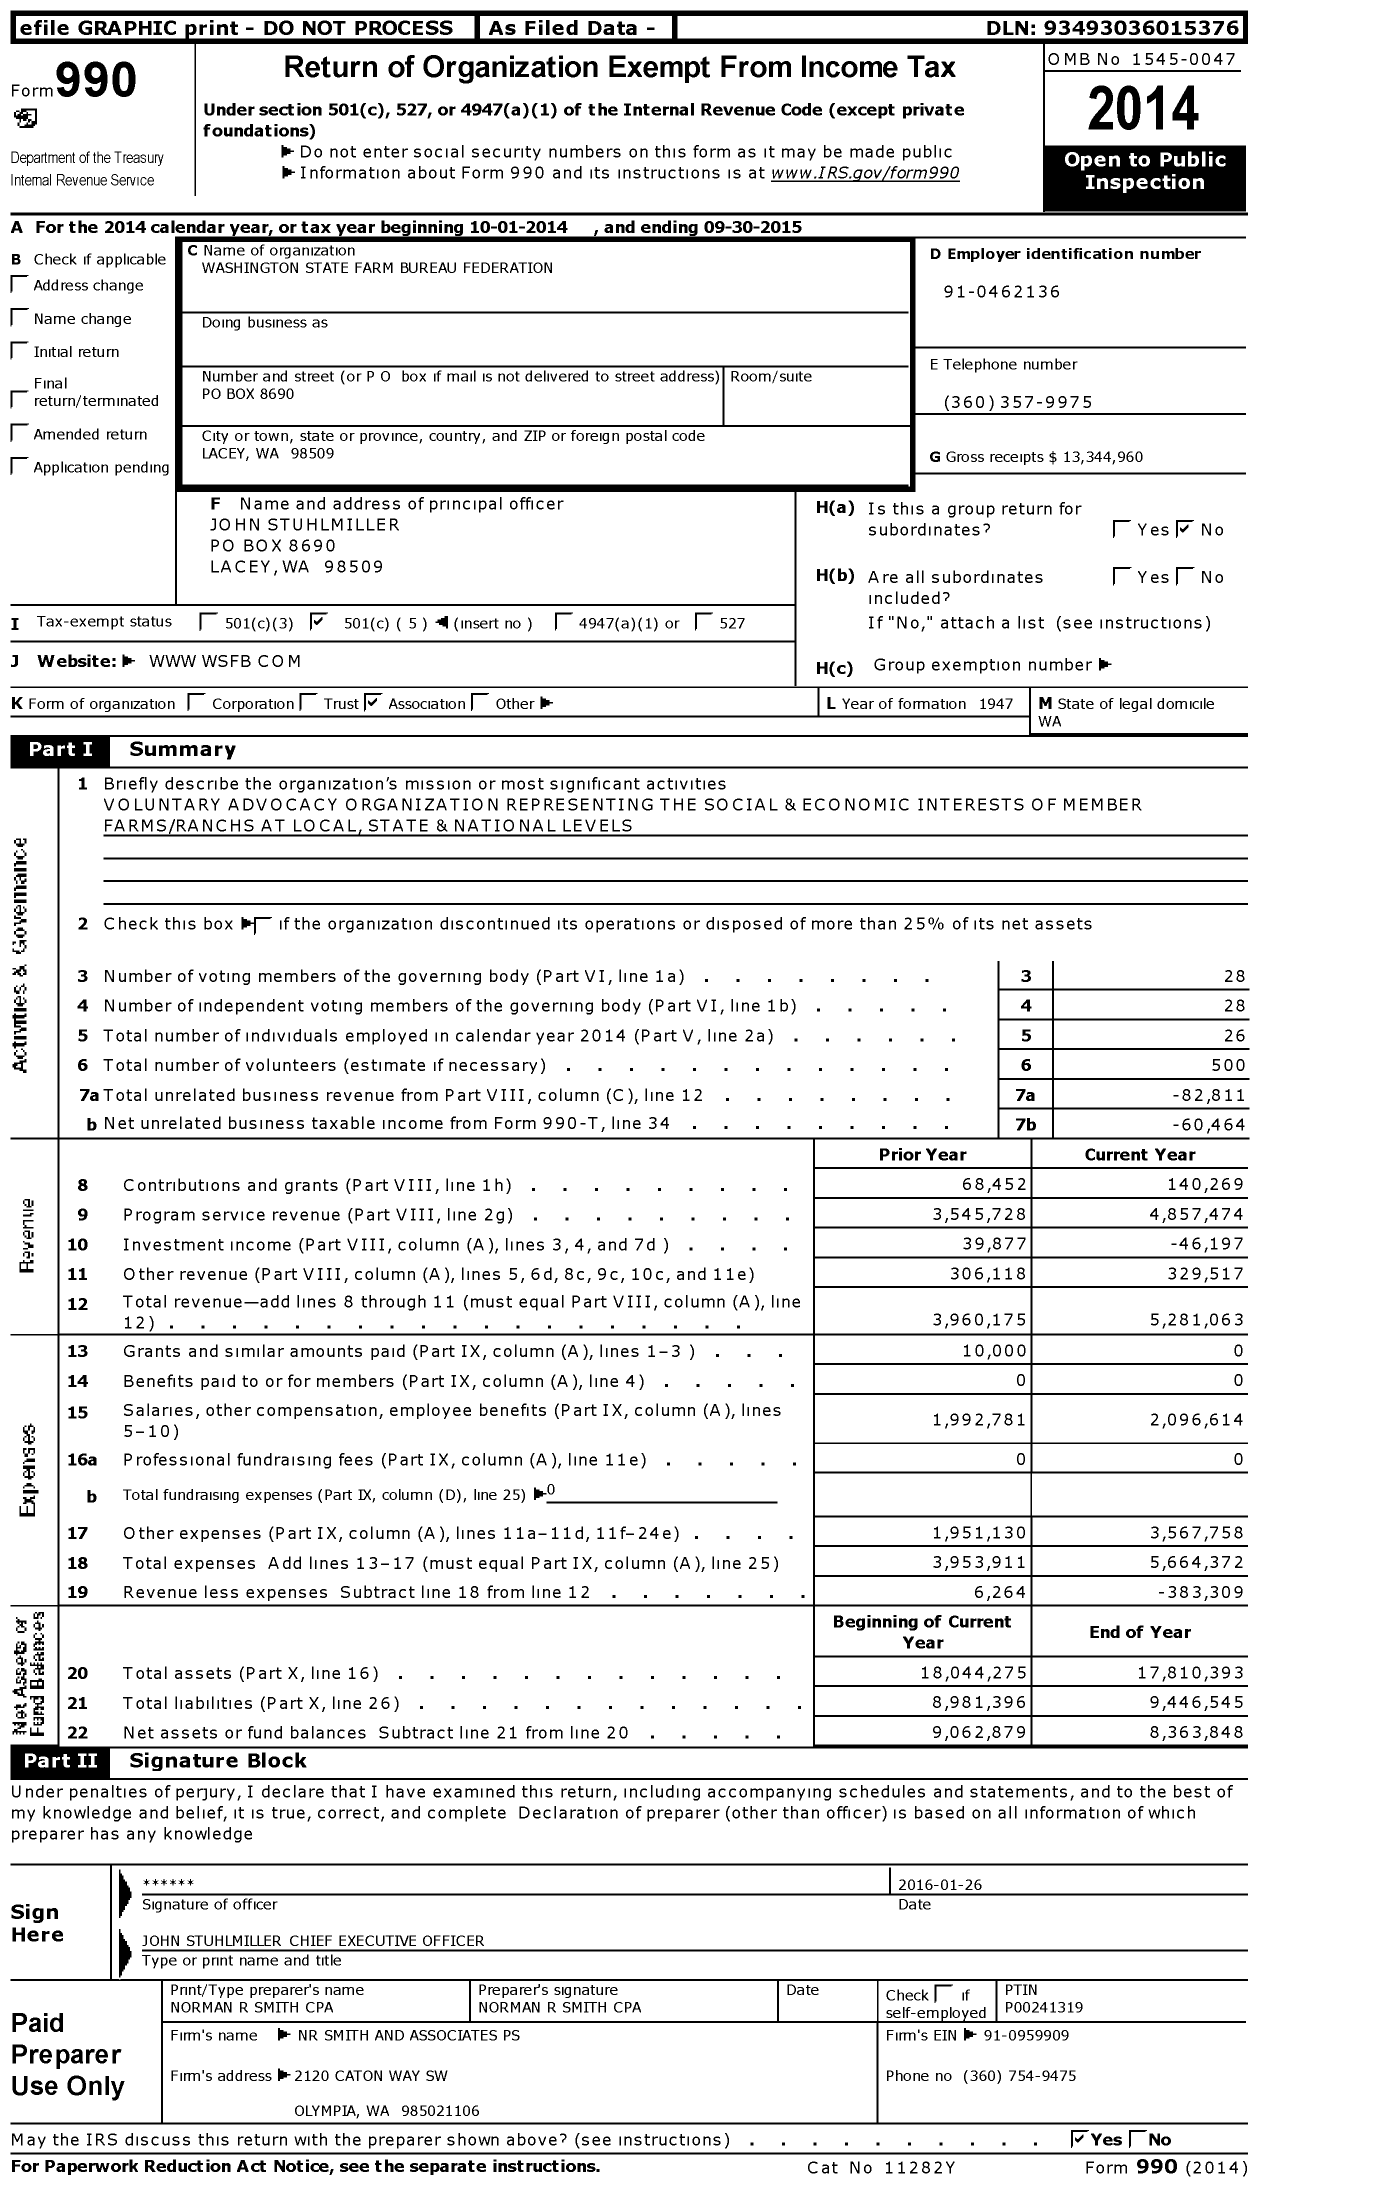 Image of first page of 2014 Form 990O for Washington Farm Bureau (WFB)